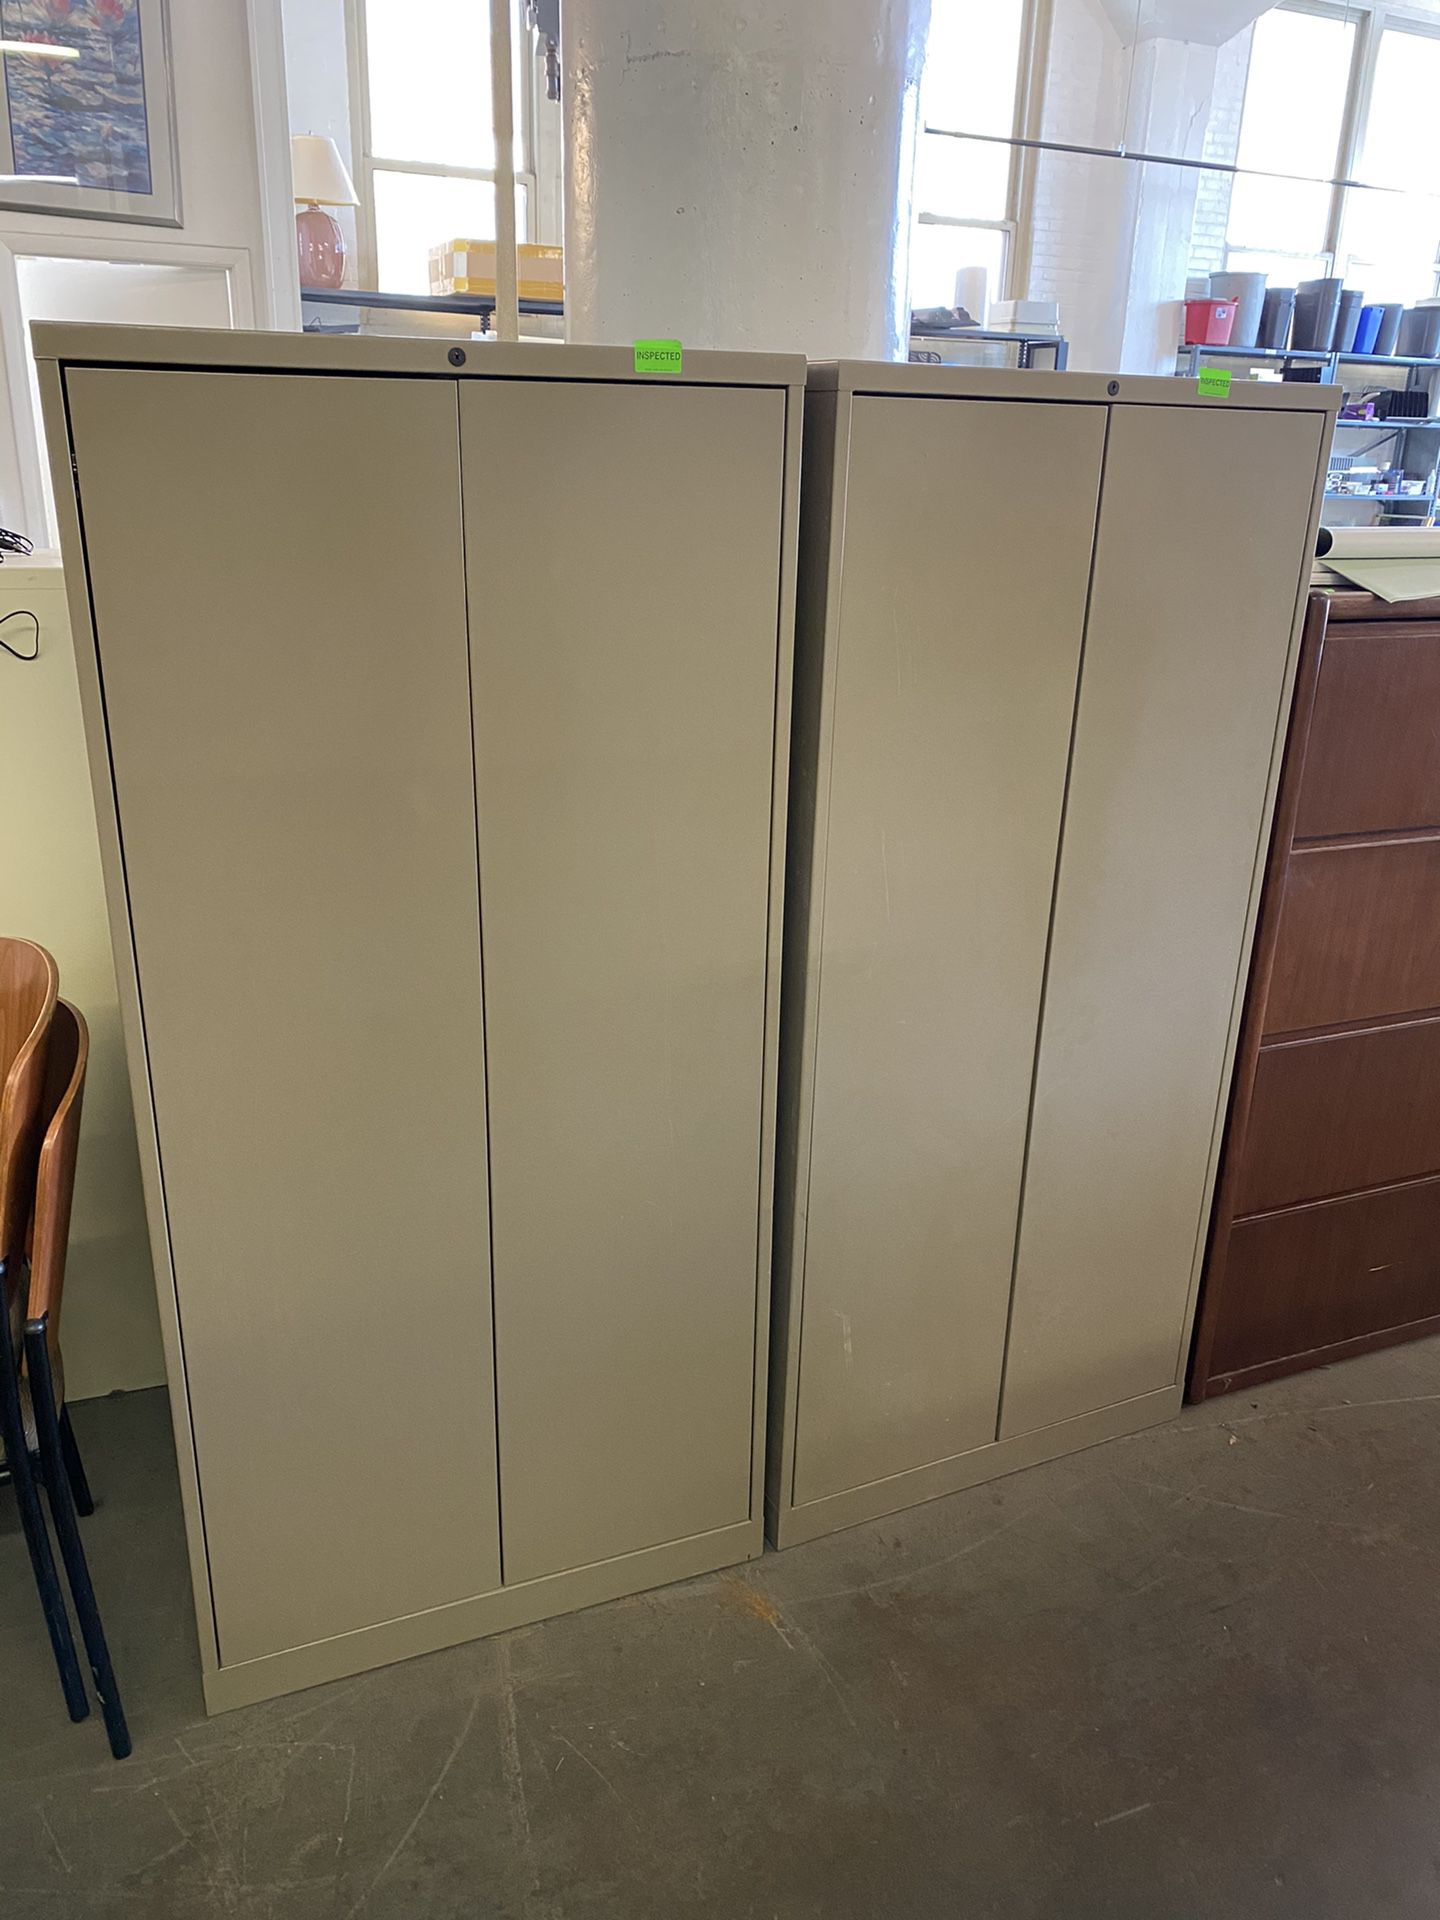 30"W x 18"D x 63"H Metal Storage Cabinet by Knoll w/ Lock & Key in Dark Beige w/ 3 adjustable shelves + the bottom shelf